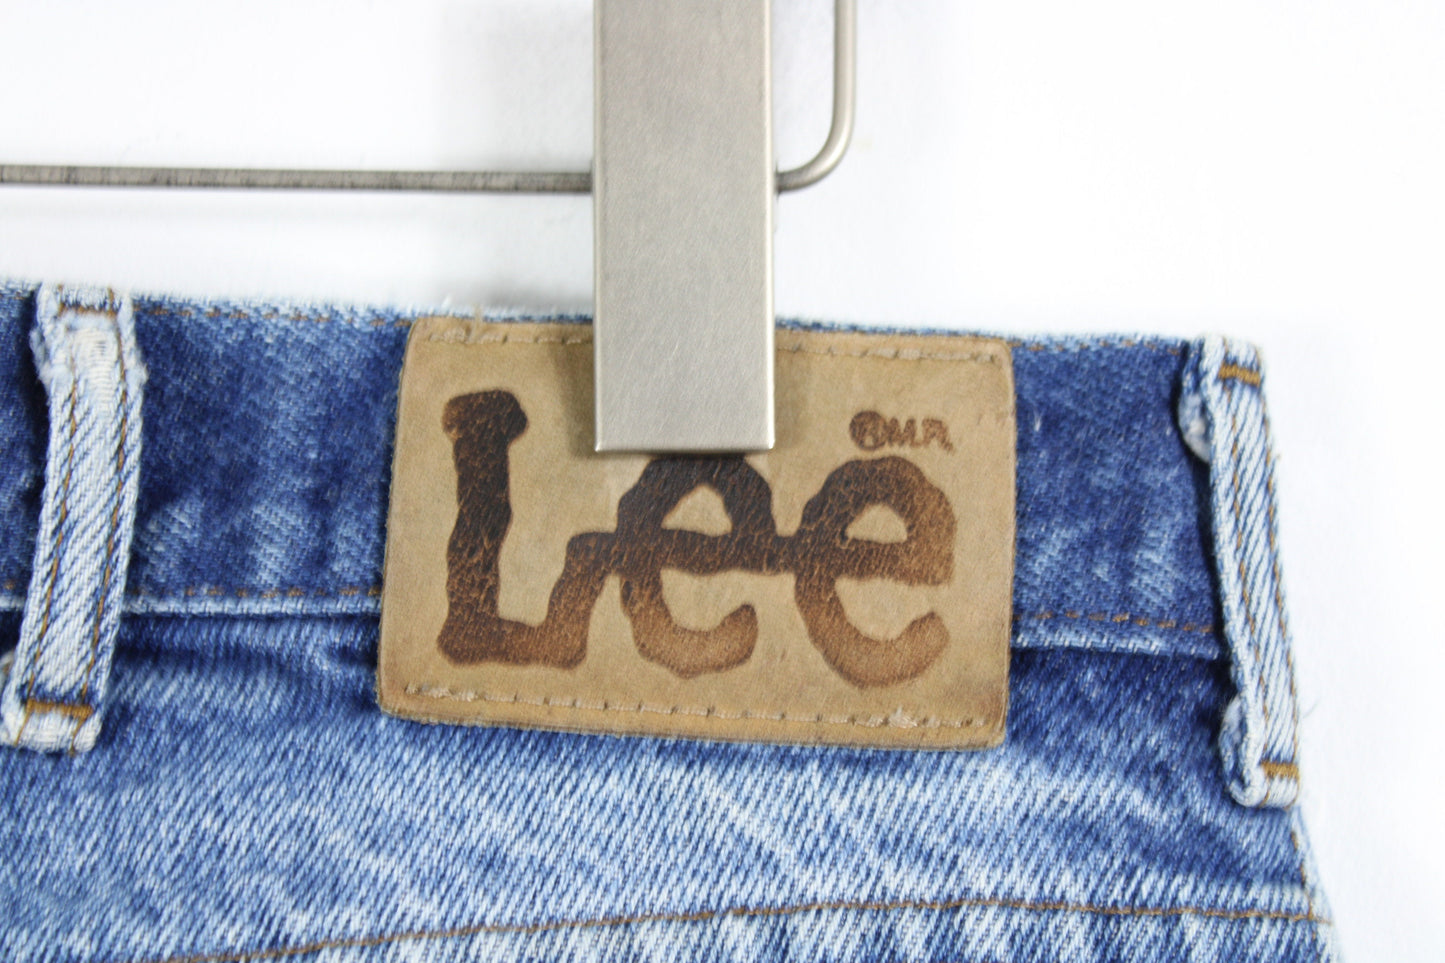 Lee Denim Jeans / Vintage / 90s Hip Hop Clothing / Streetwear / 36 x 33